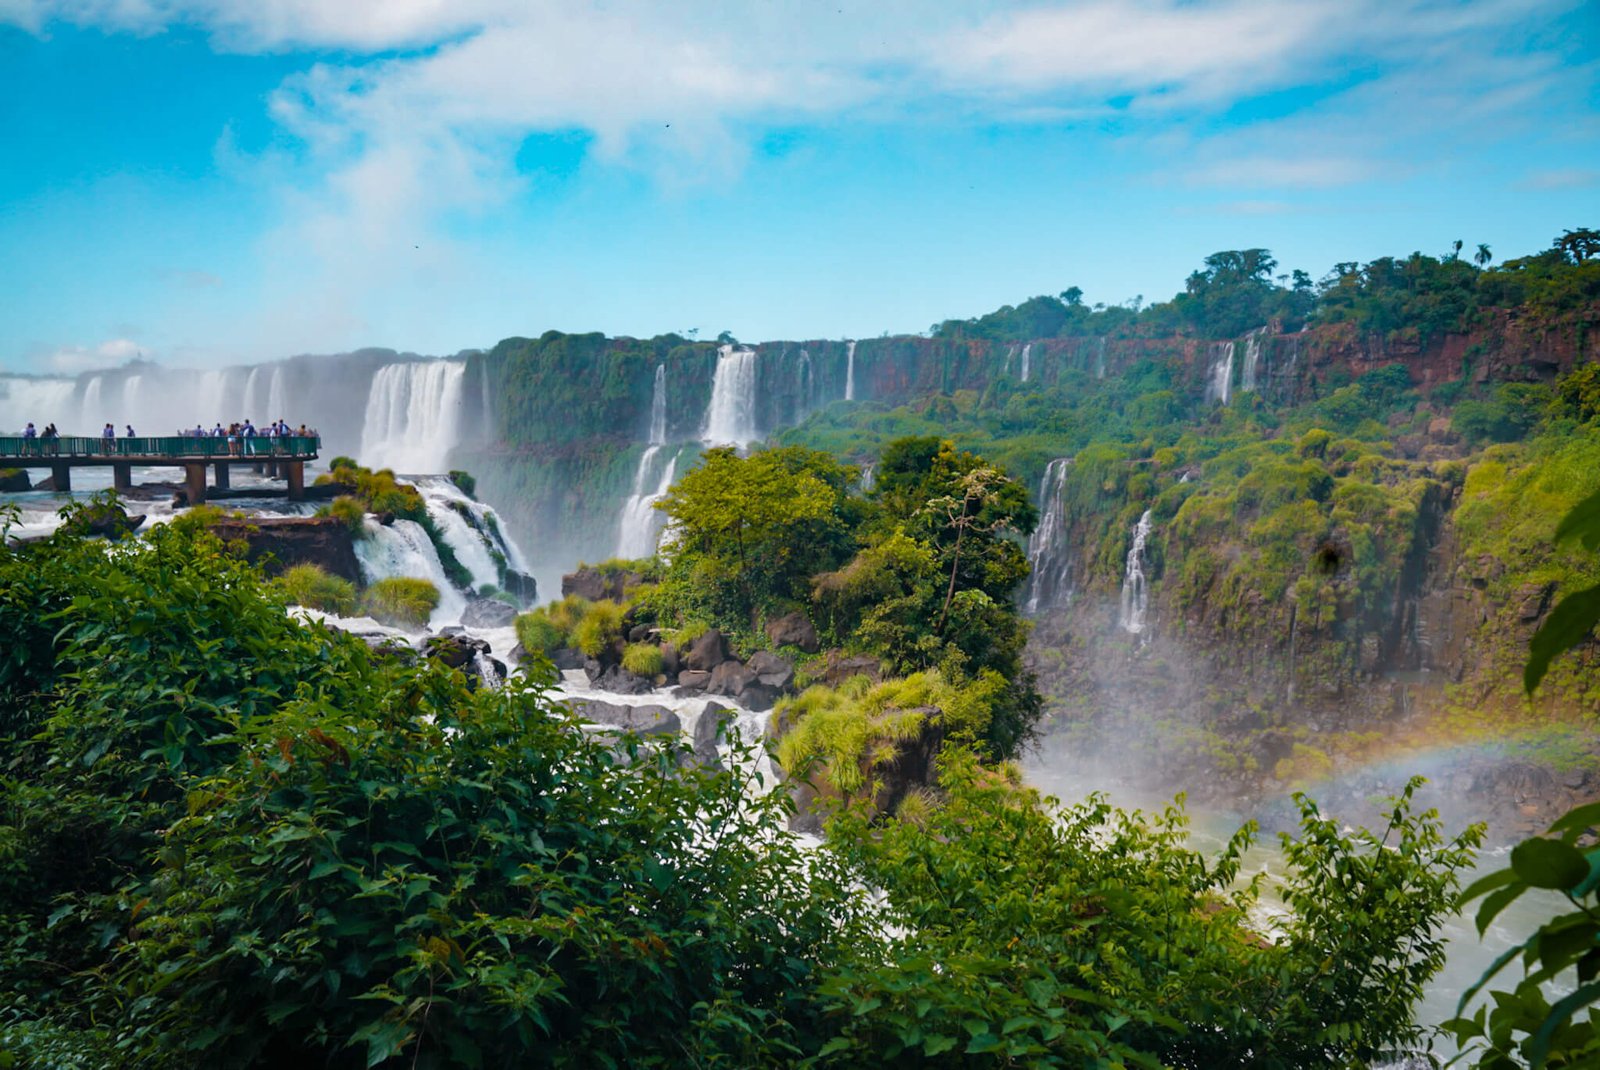 Brazil side of Iguazu Falls